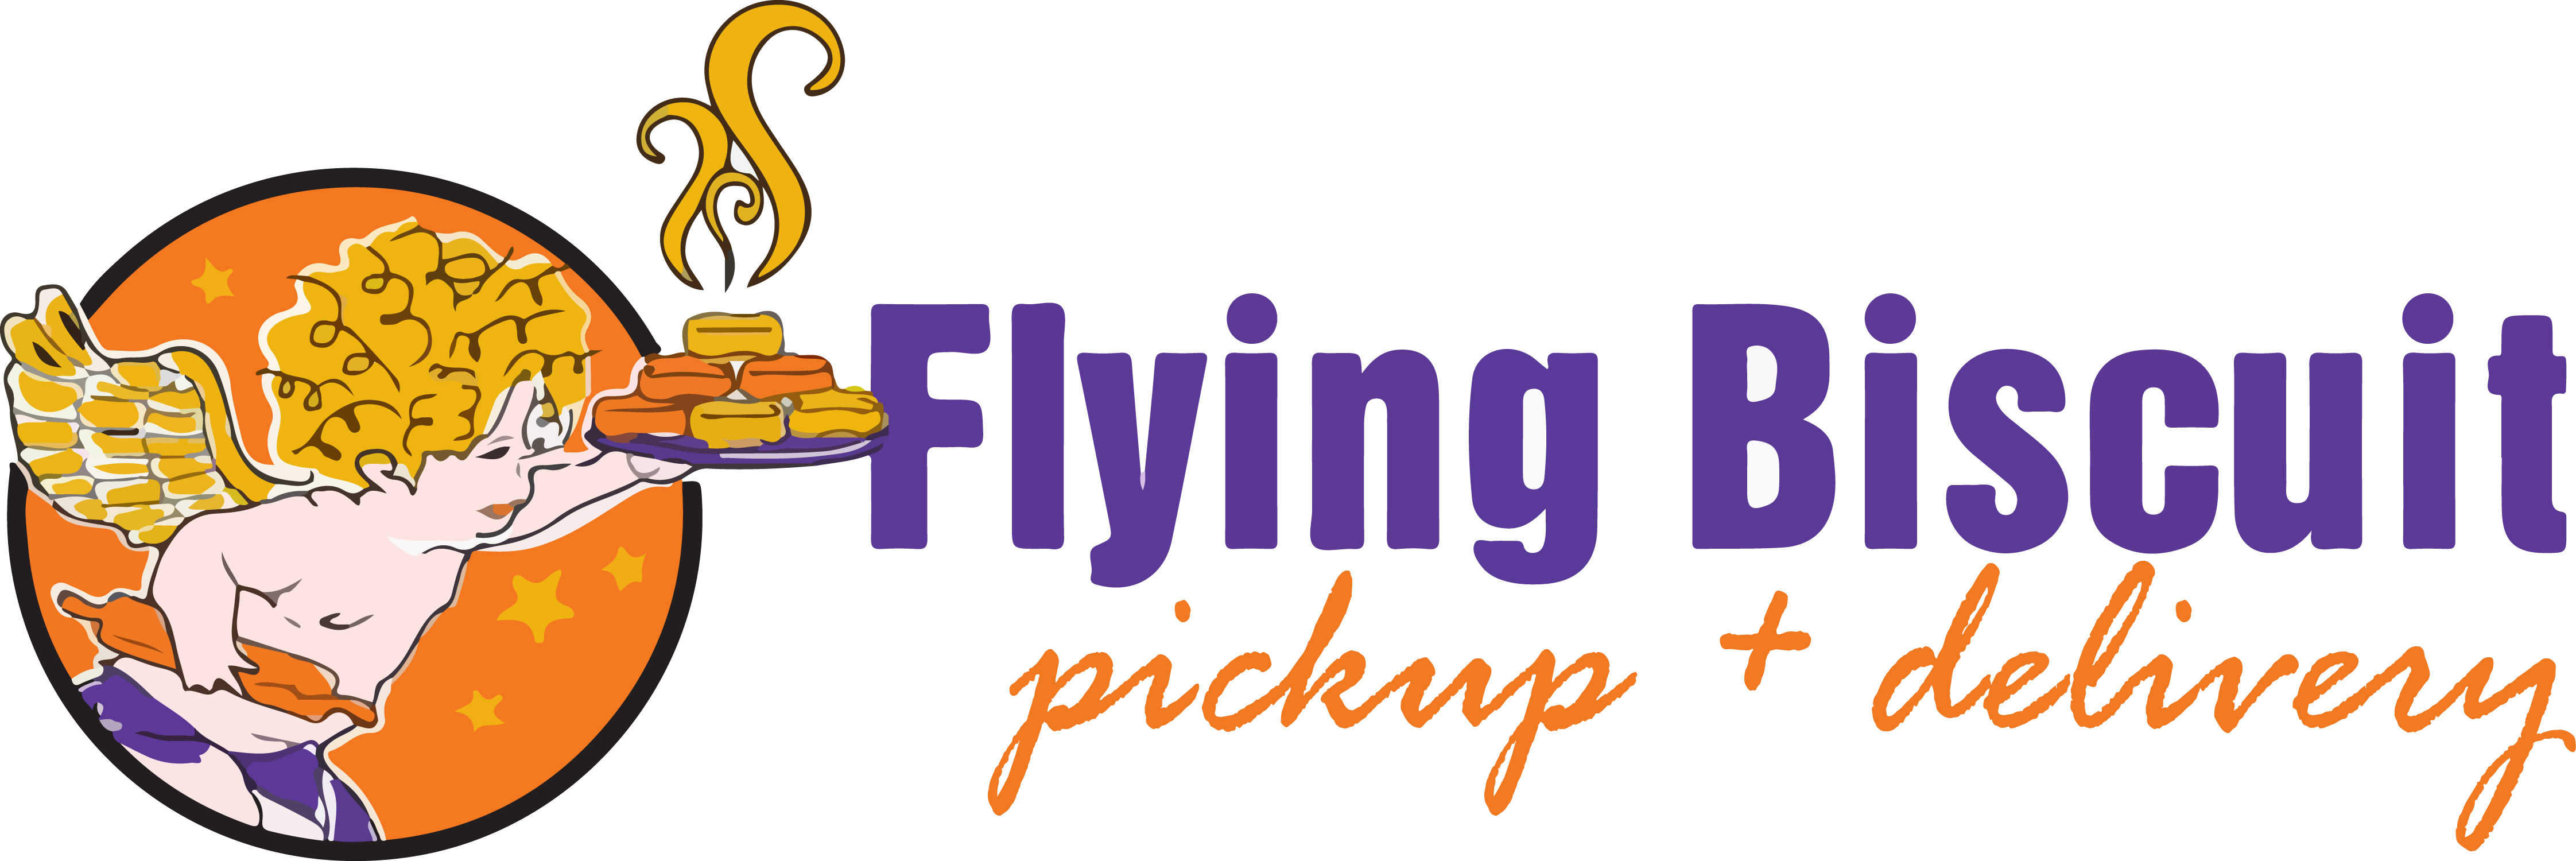 Flying Biscuit Café Pickup & Delivery